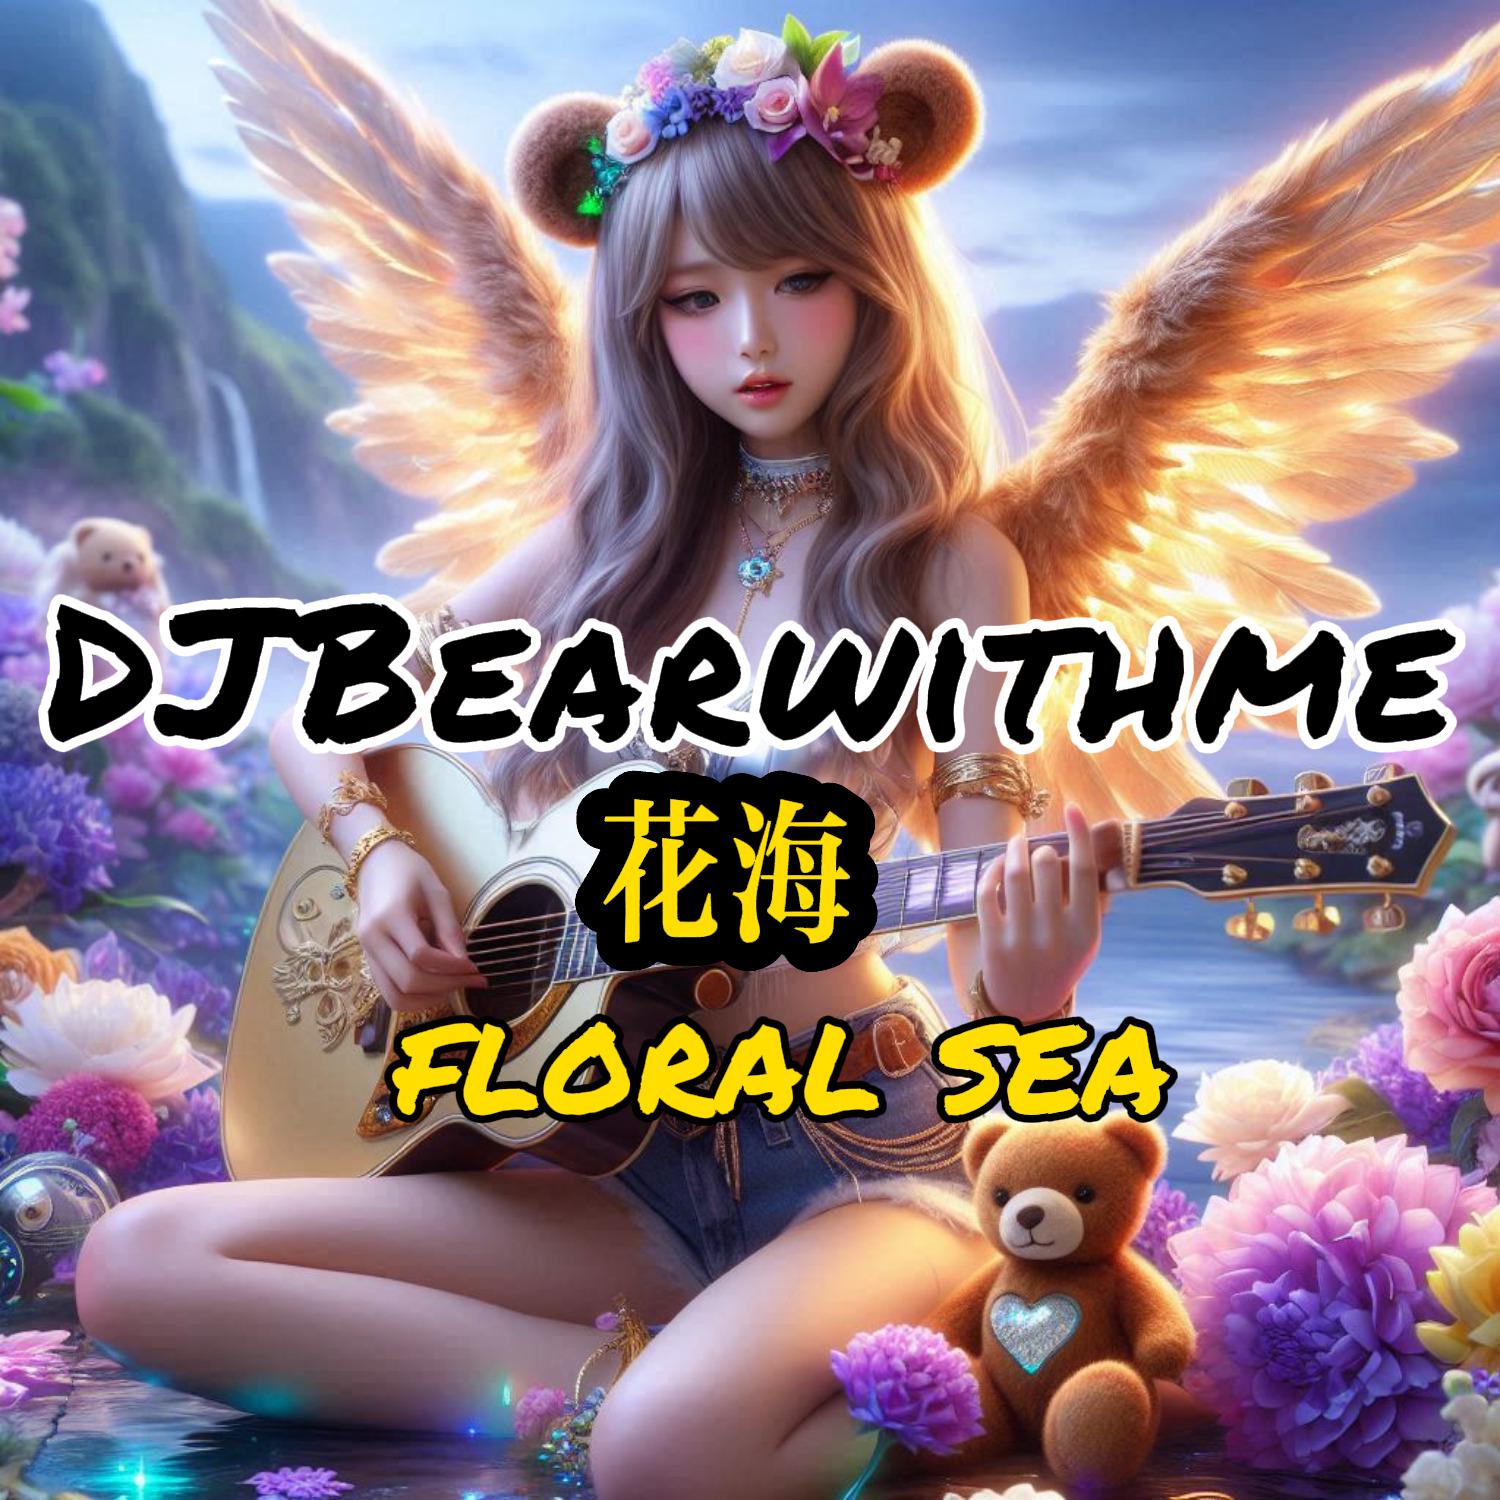 DJBearwithme - 花海 Floral Sea (live)